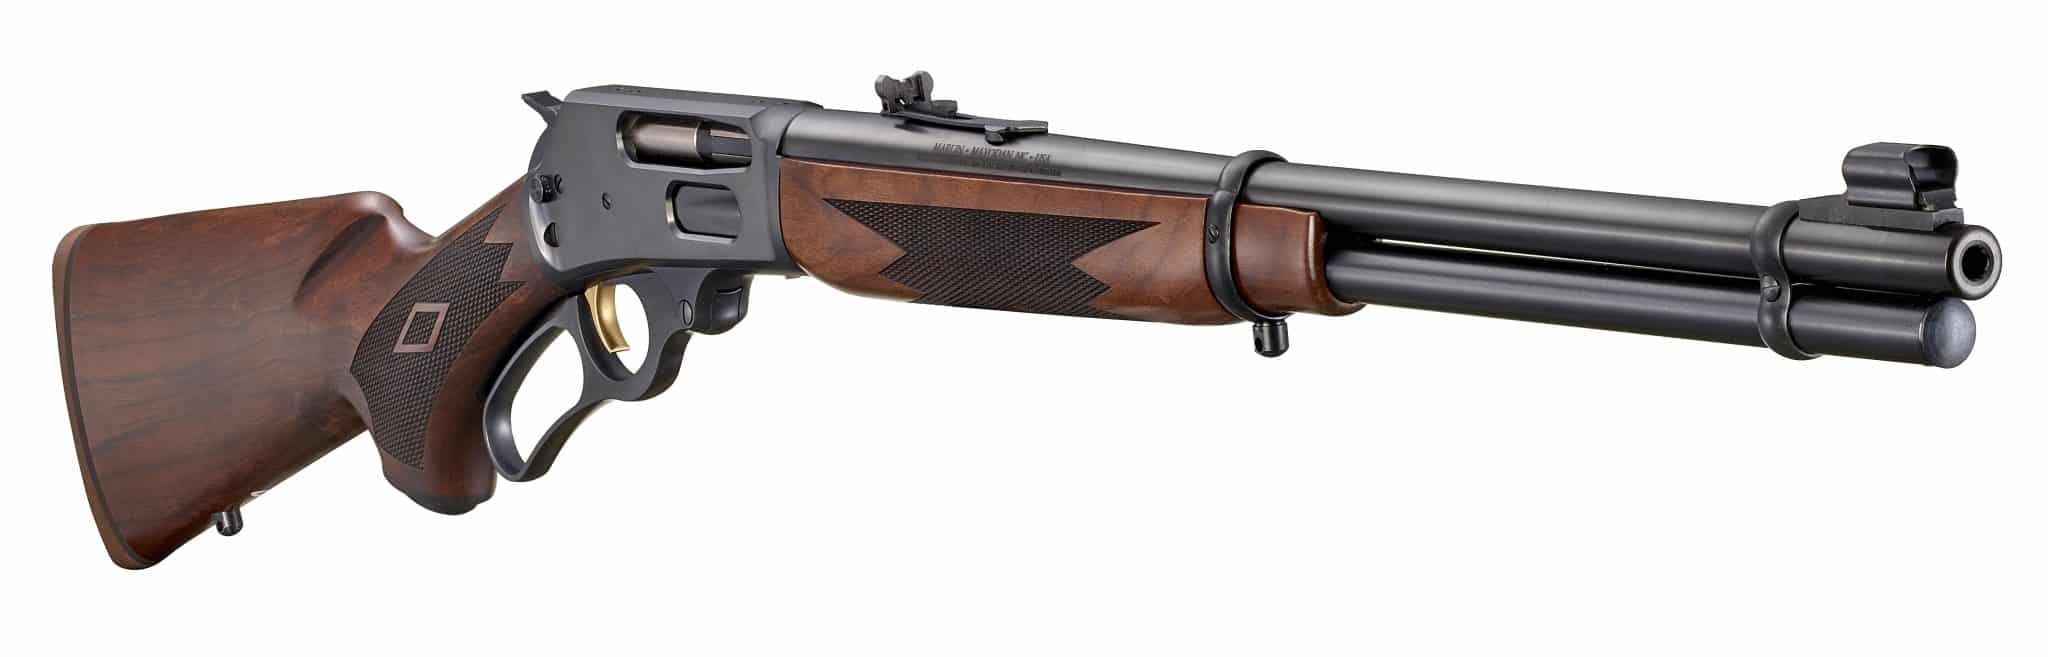 Historically Sleek Made Modern: Marlin 336 Classic .30-30 Rifle Review